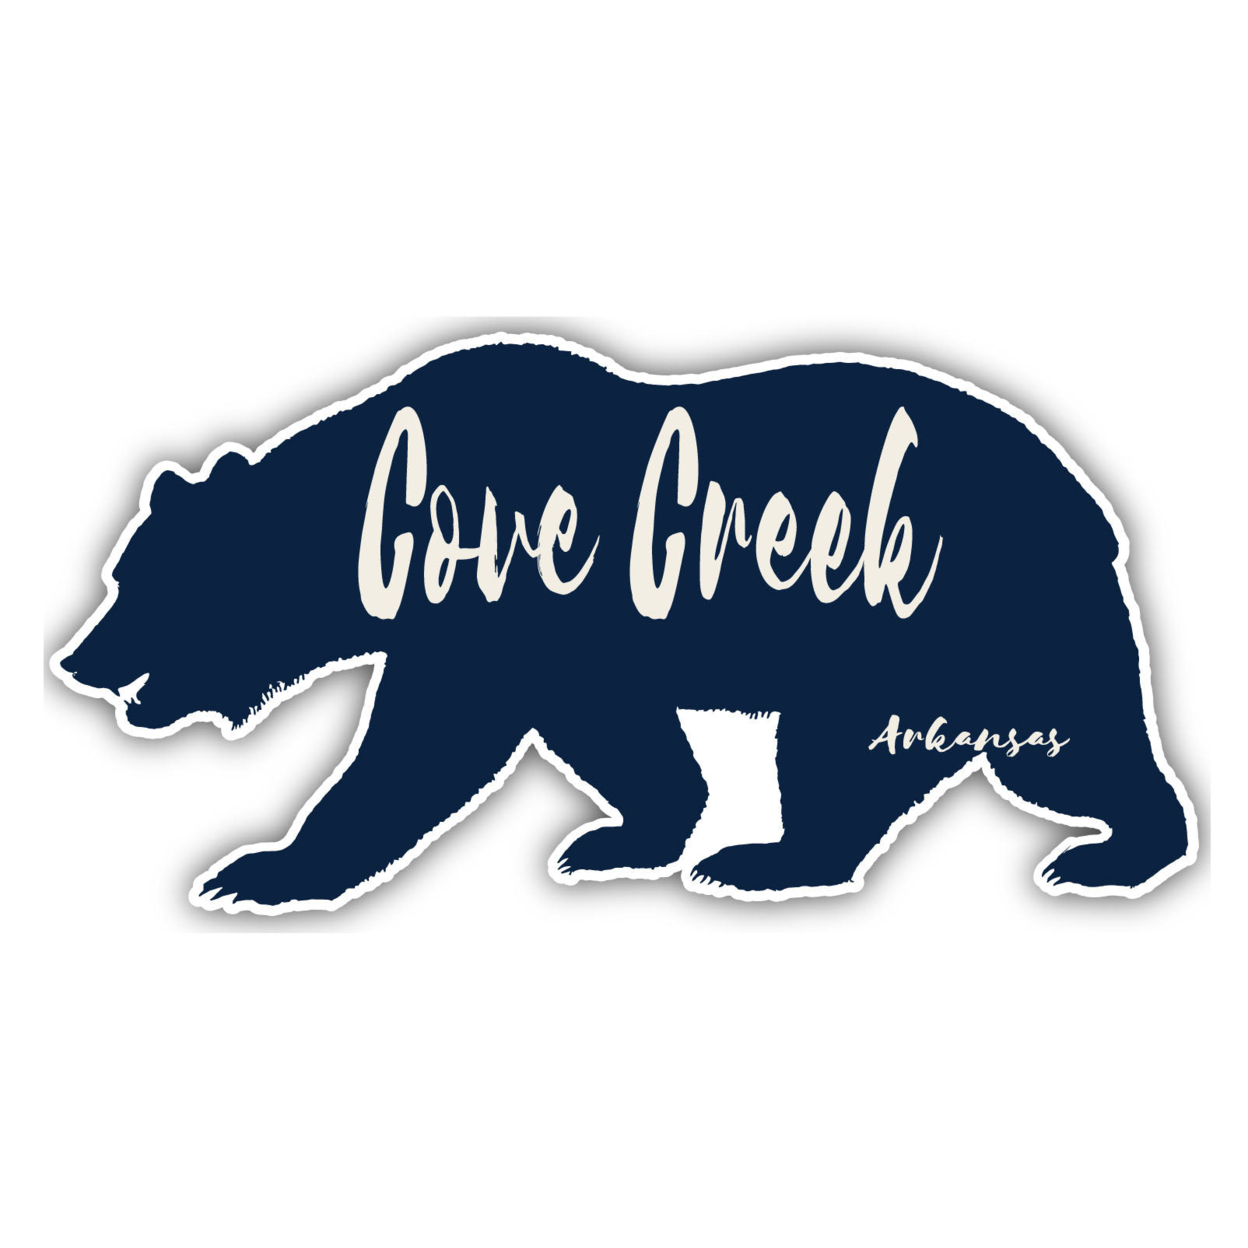 Cove Creek Arkansas Souvenir Decorative Stickers (Choose Theme And Size) - Single Unit, 10-Inch, Bear